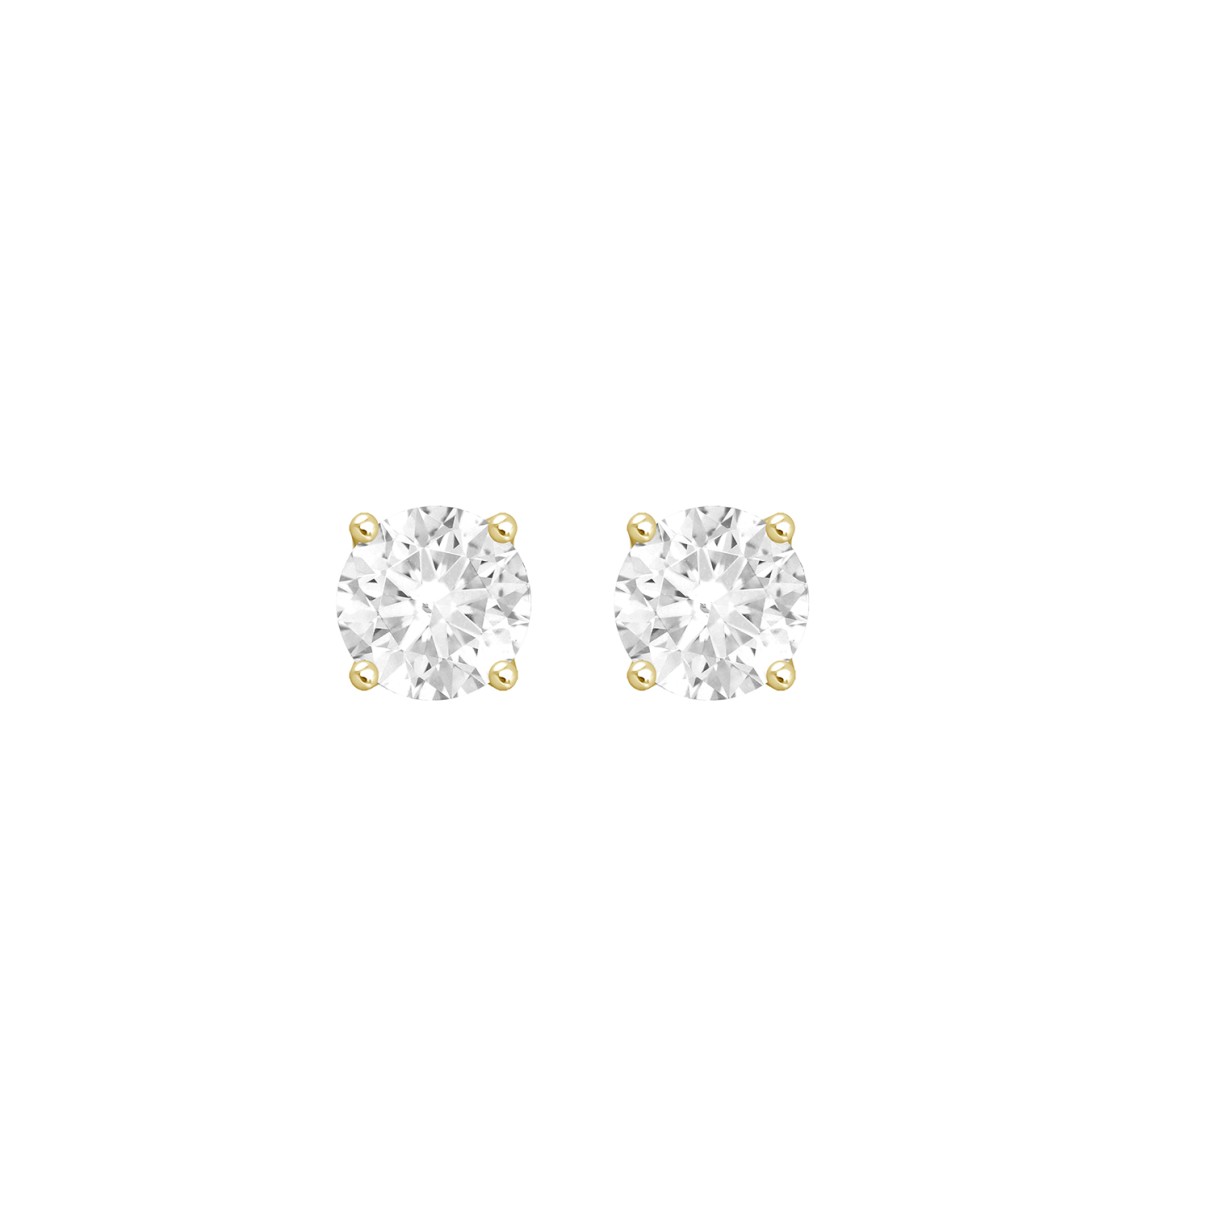 LADIES SOLITAIRE EARRINGS 1 1/2CT ROUND DIAMOND 14K YELLOW GOLD